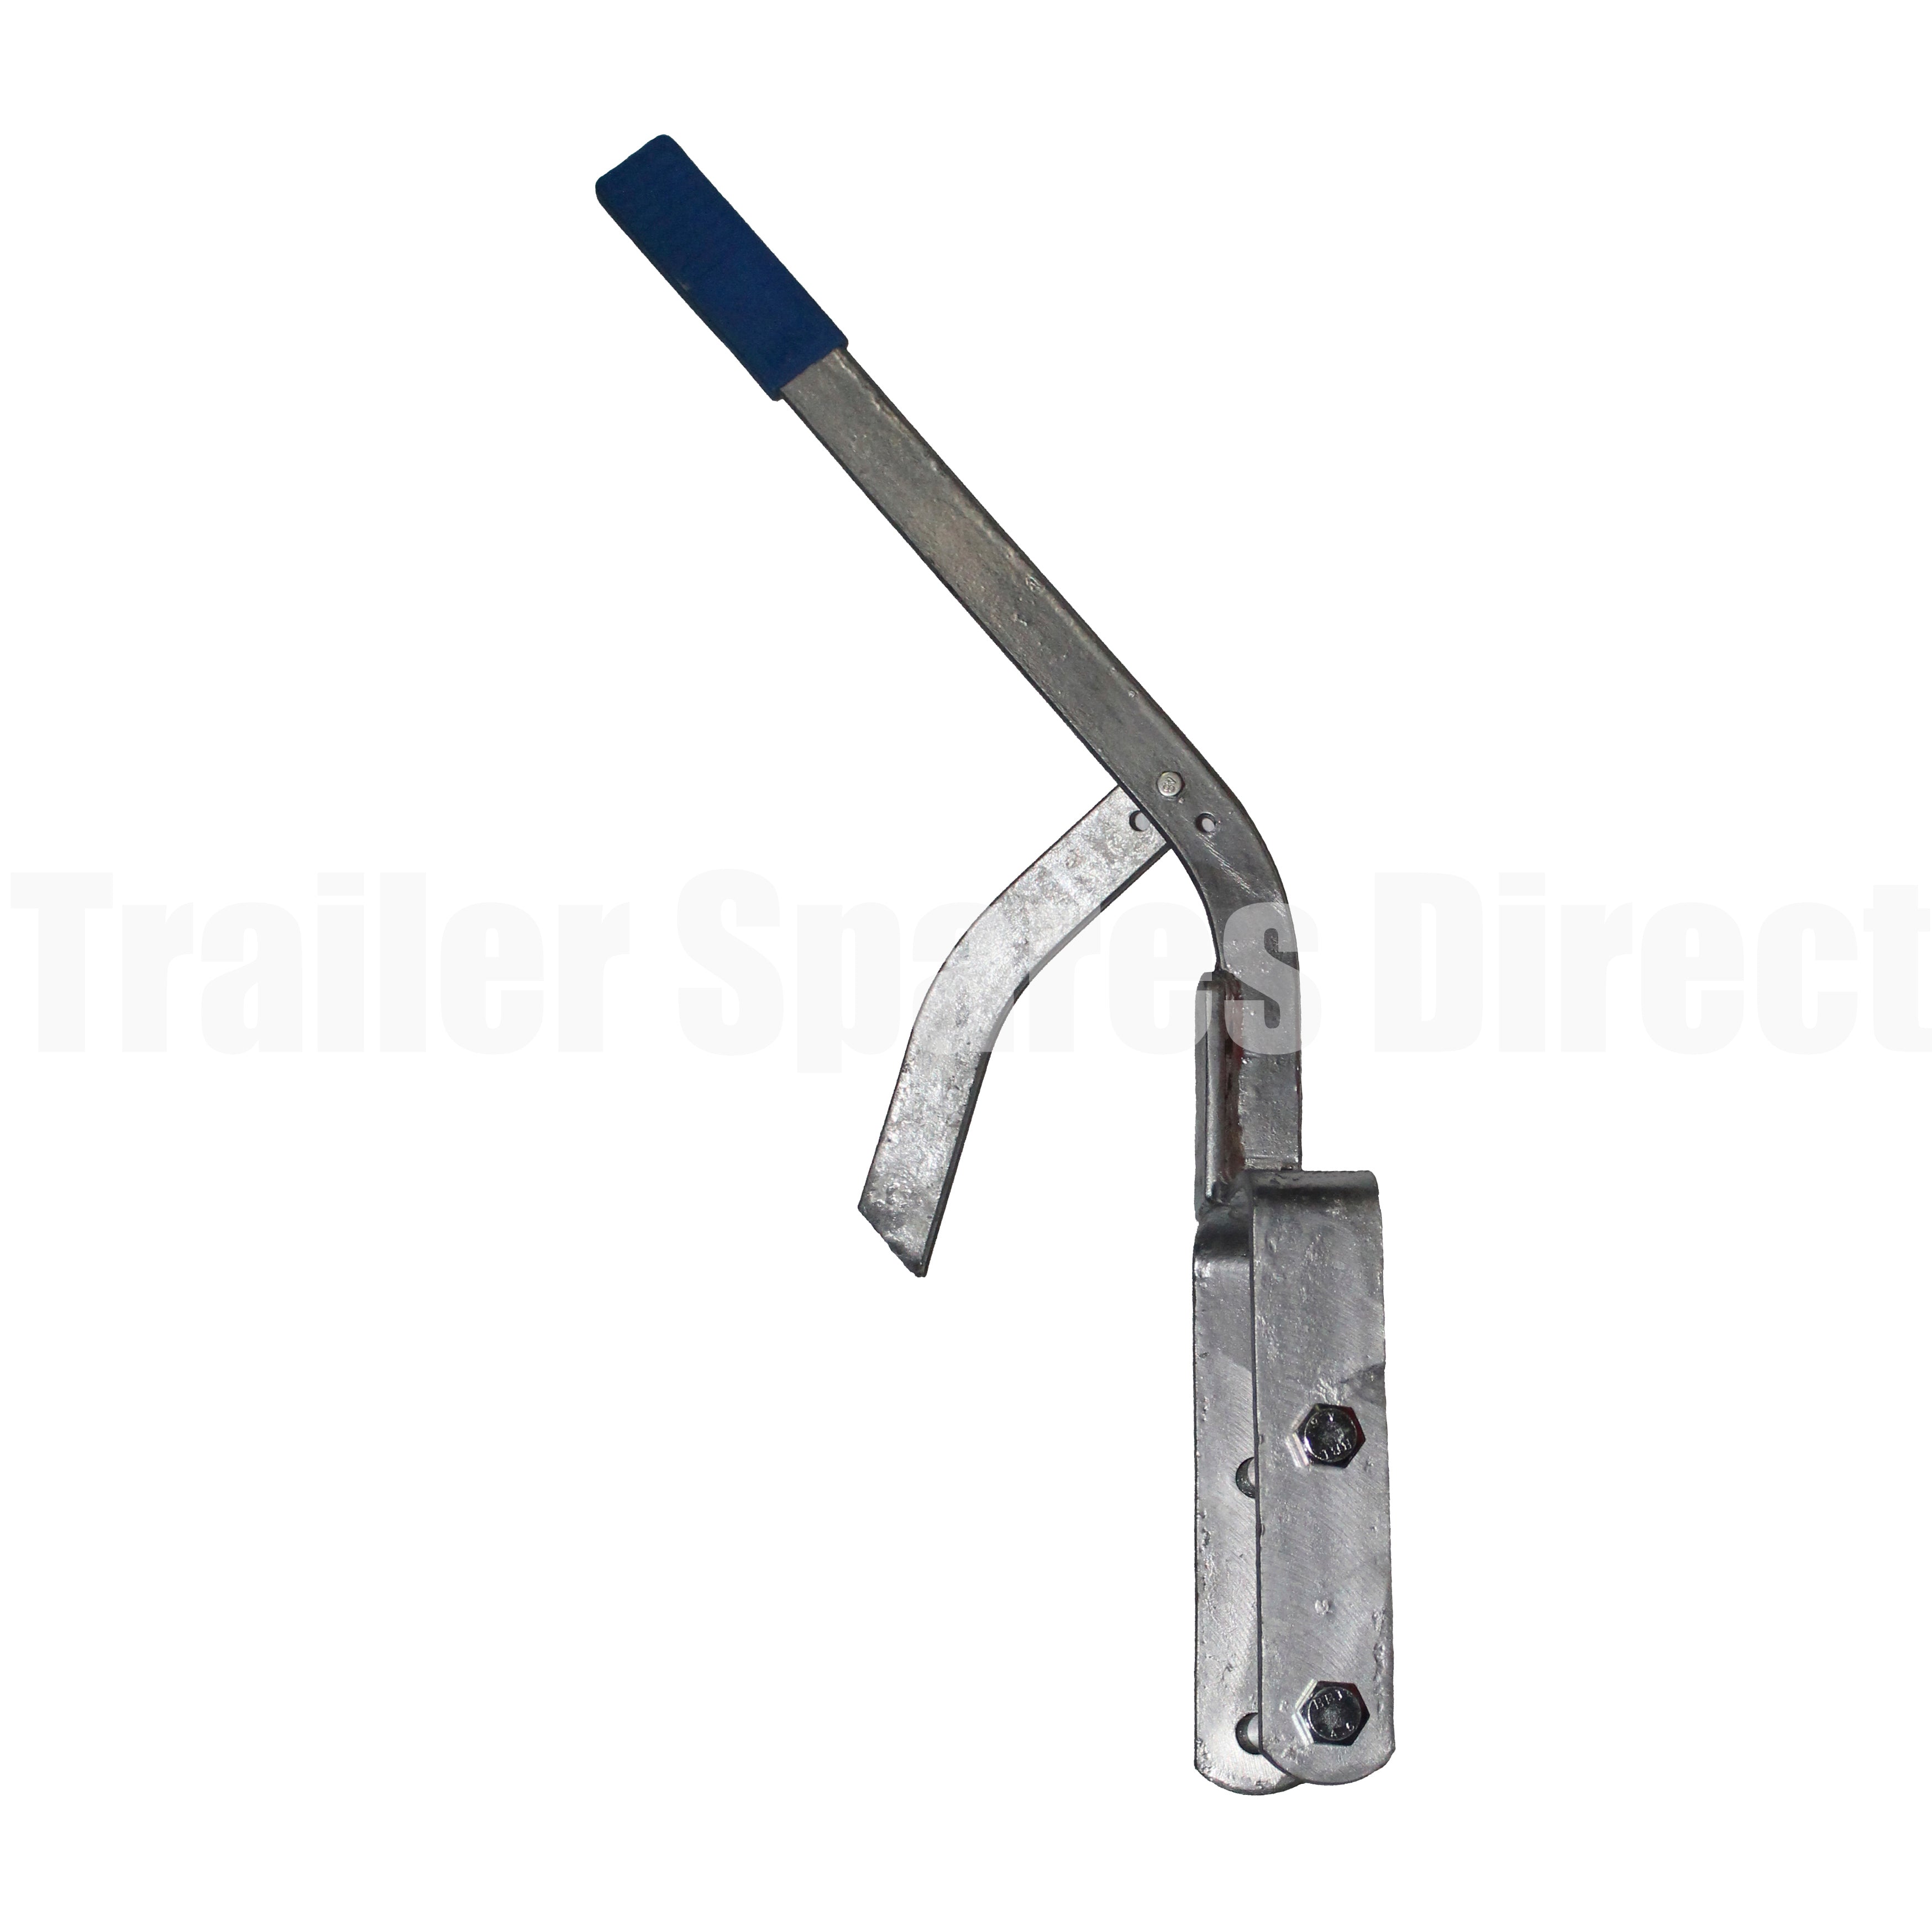 Handbrake lever for 100mm wide single drawbar applications